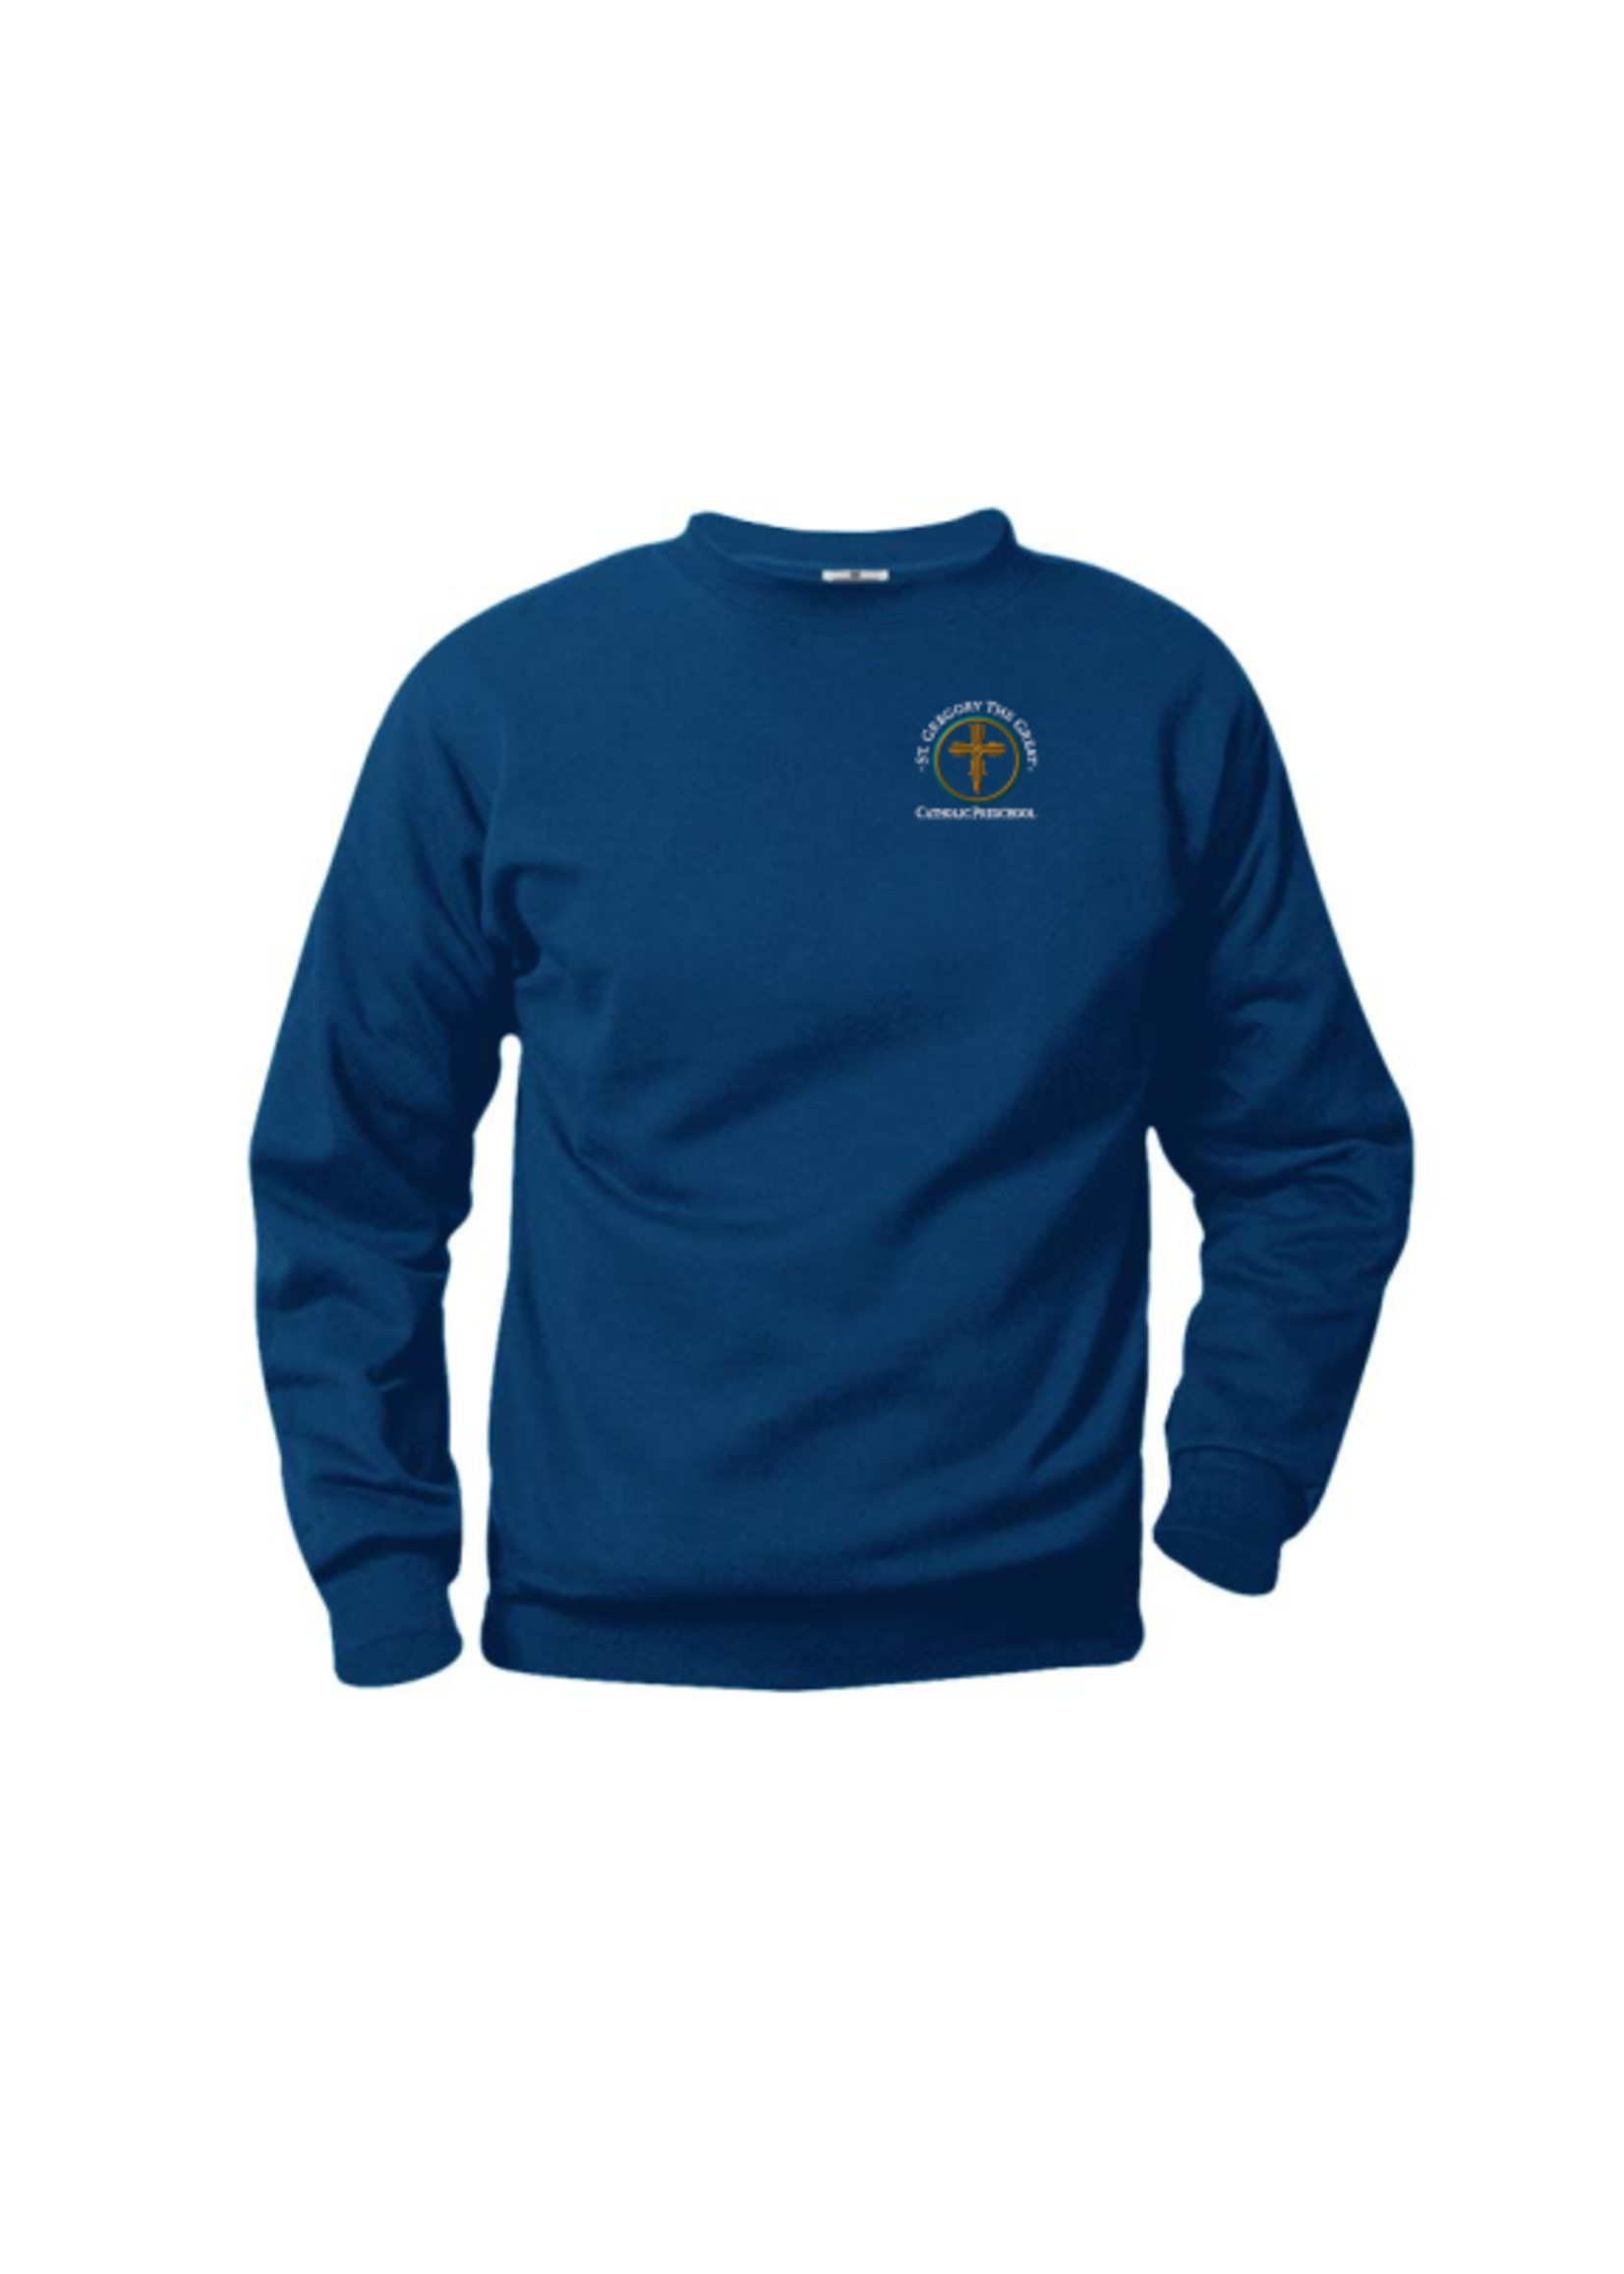 SGGP Navy Fleece Crewneck Sweatshirt